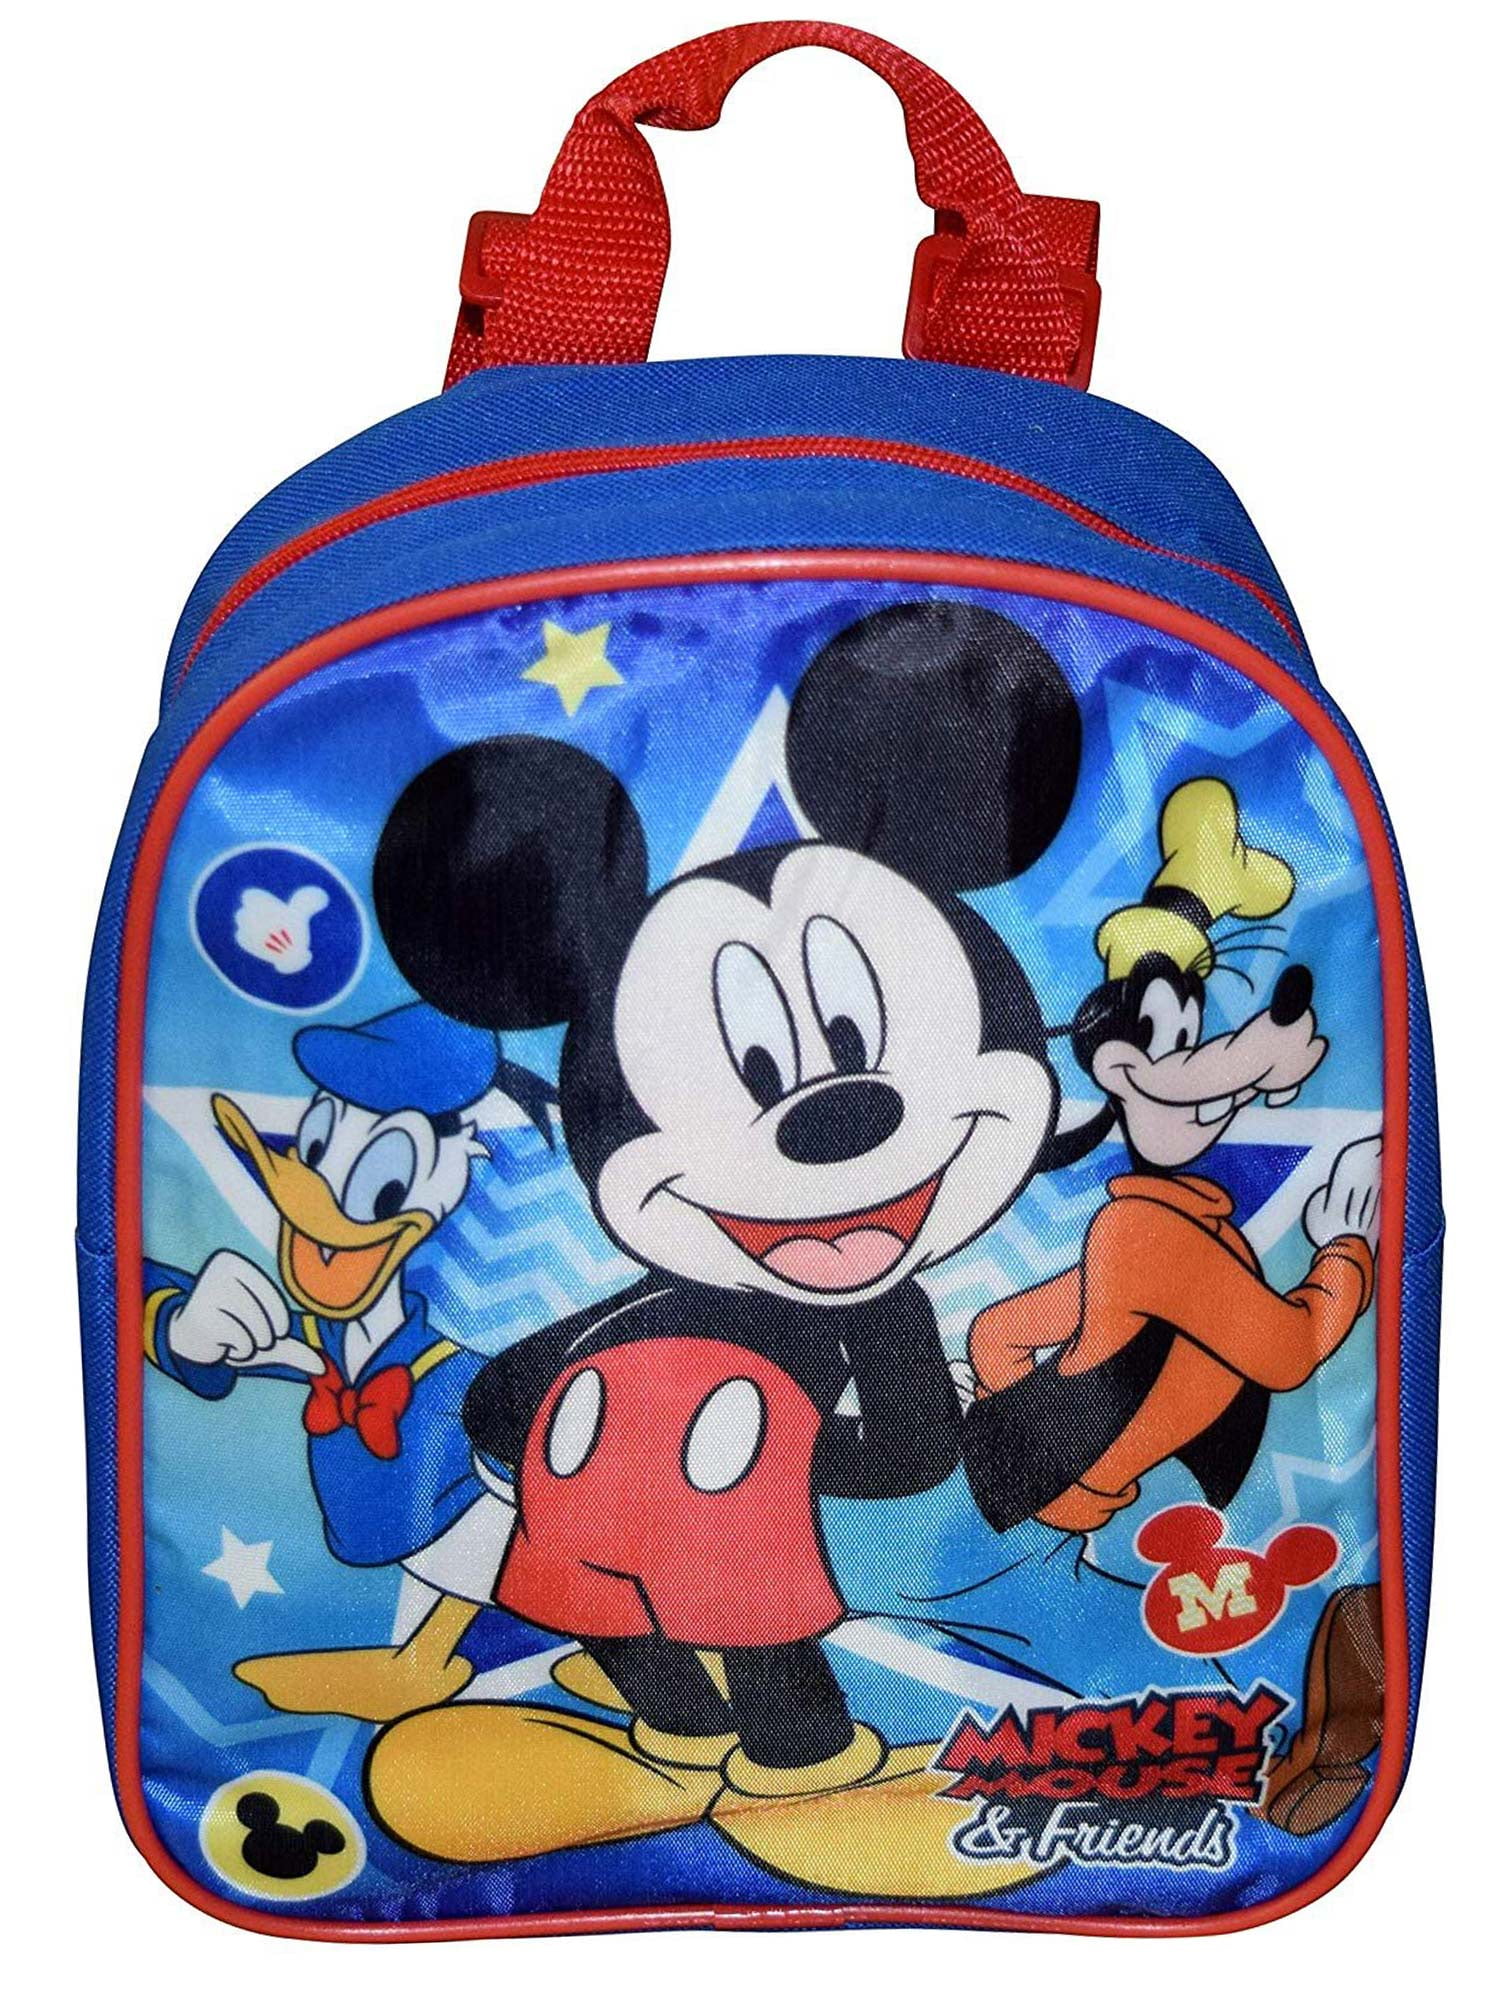 Disney Mickey Mouse 11" Backpack Preschool School Toddler Kids Book Bag Blue NEW 